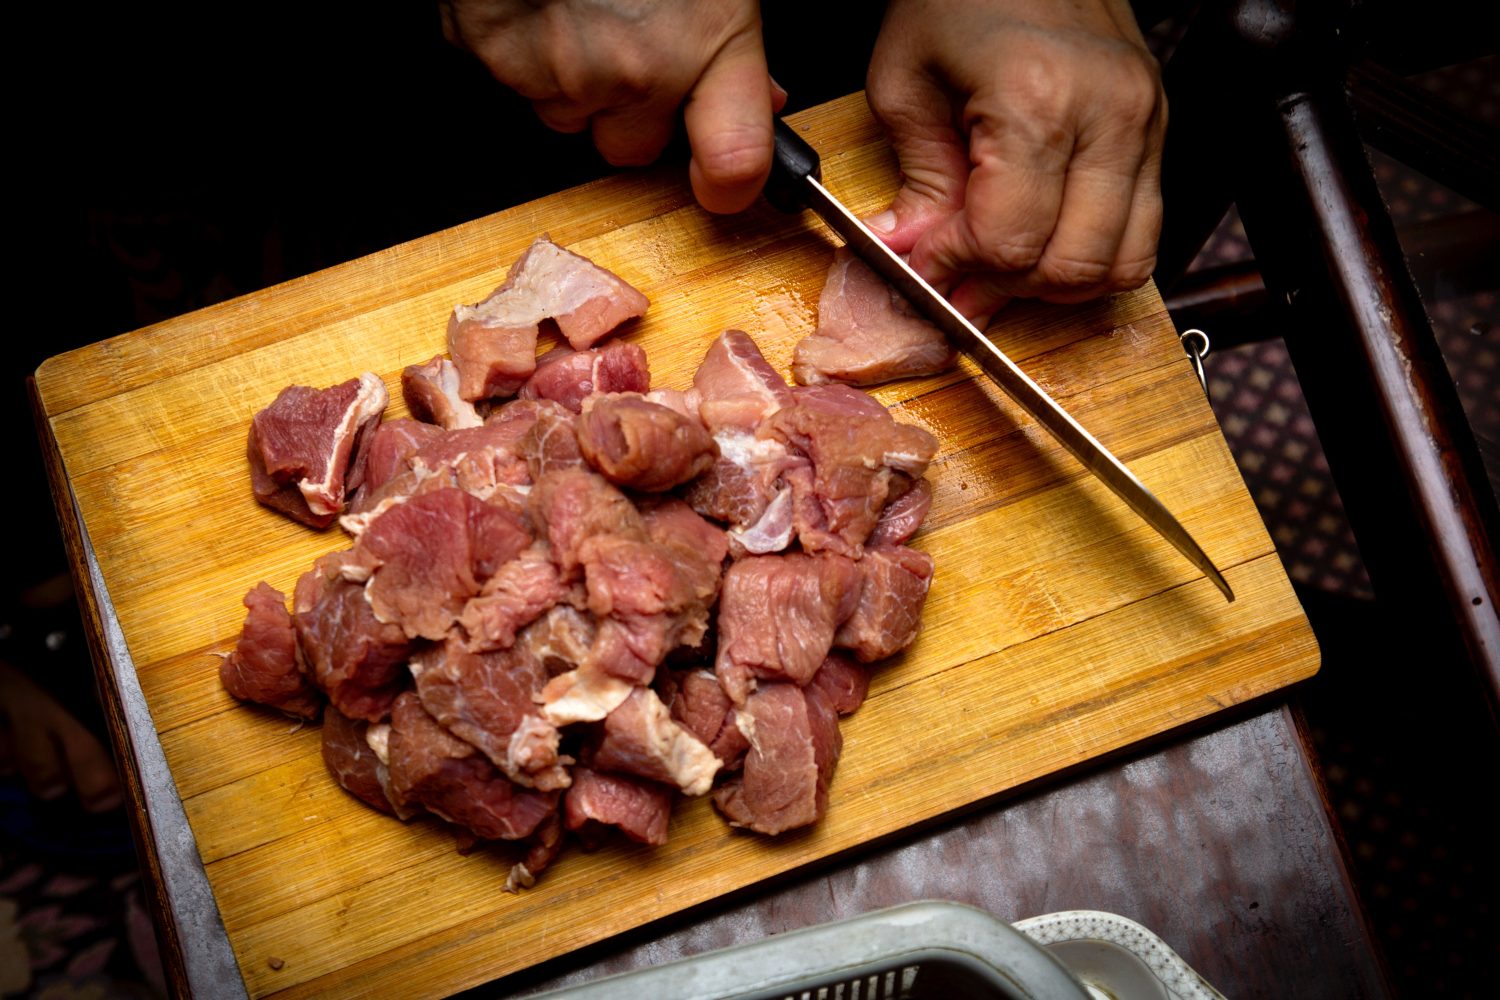 raw-pork-being-chopped